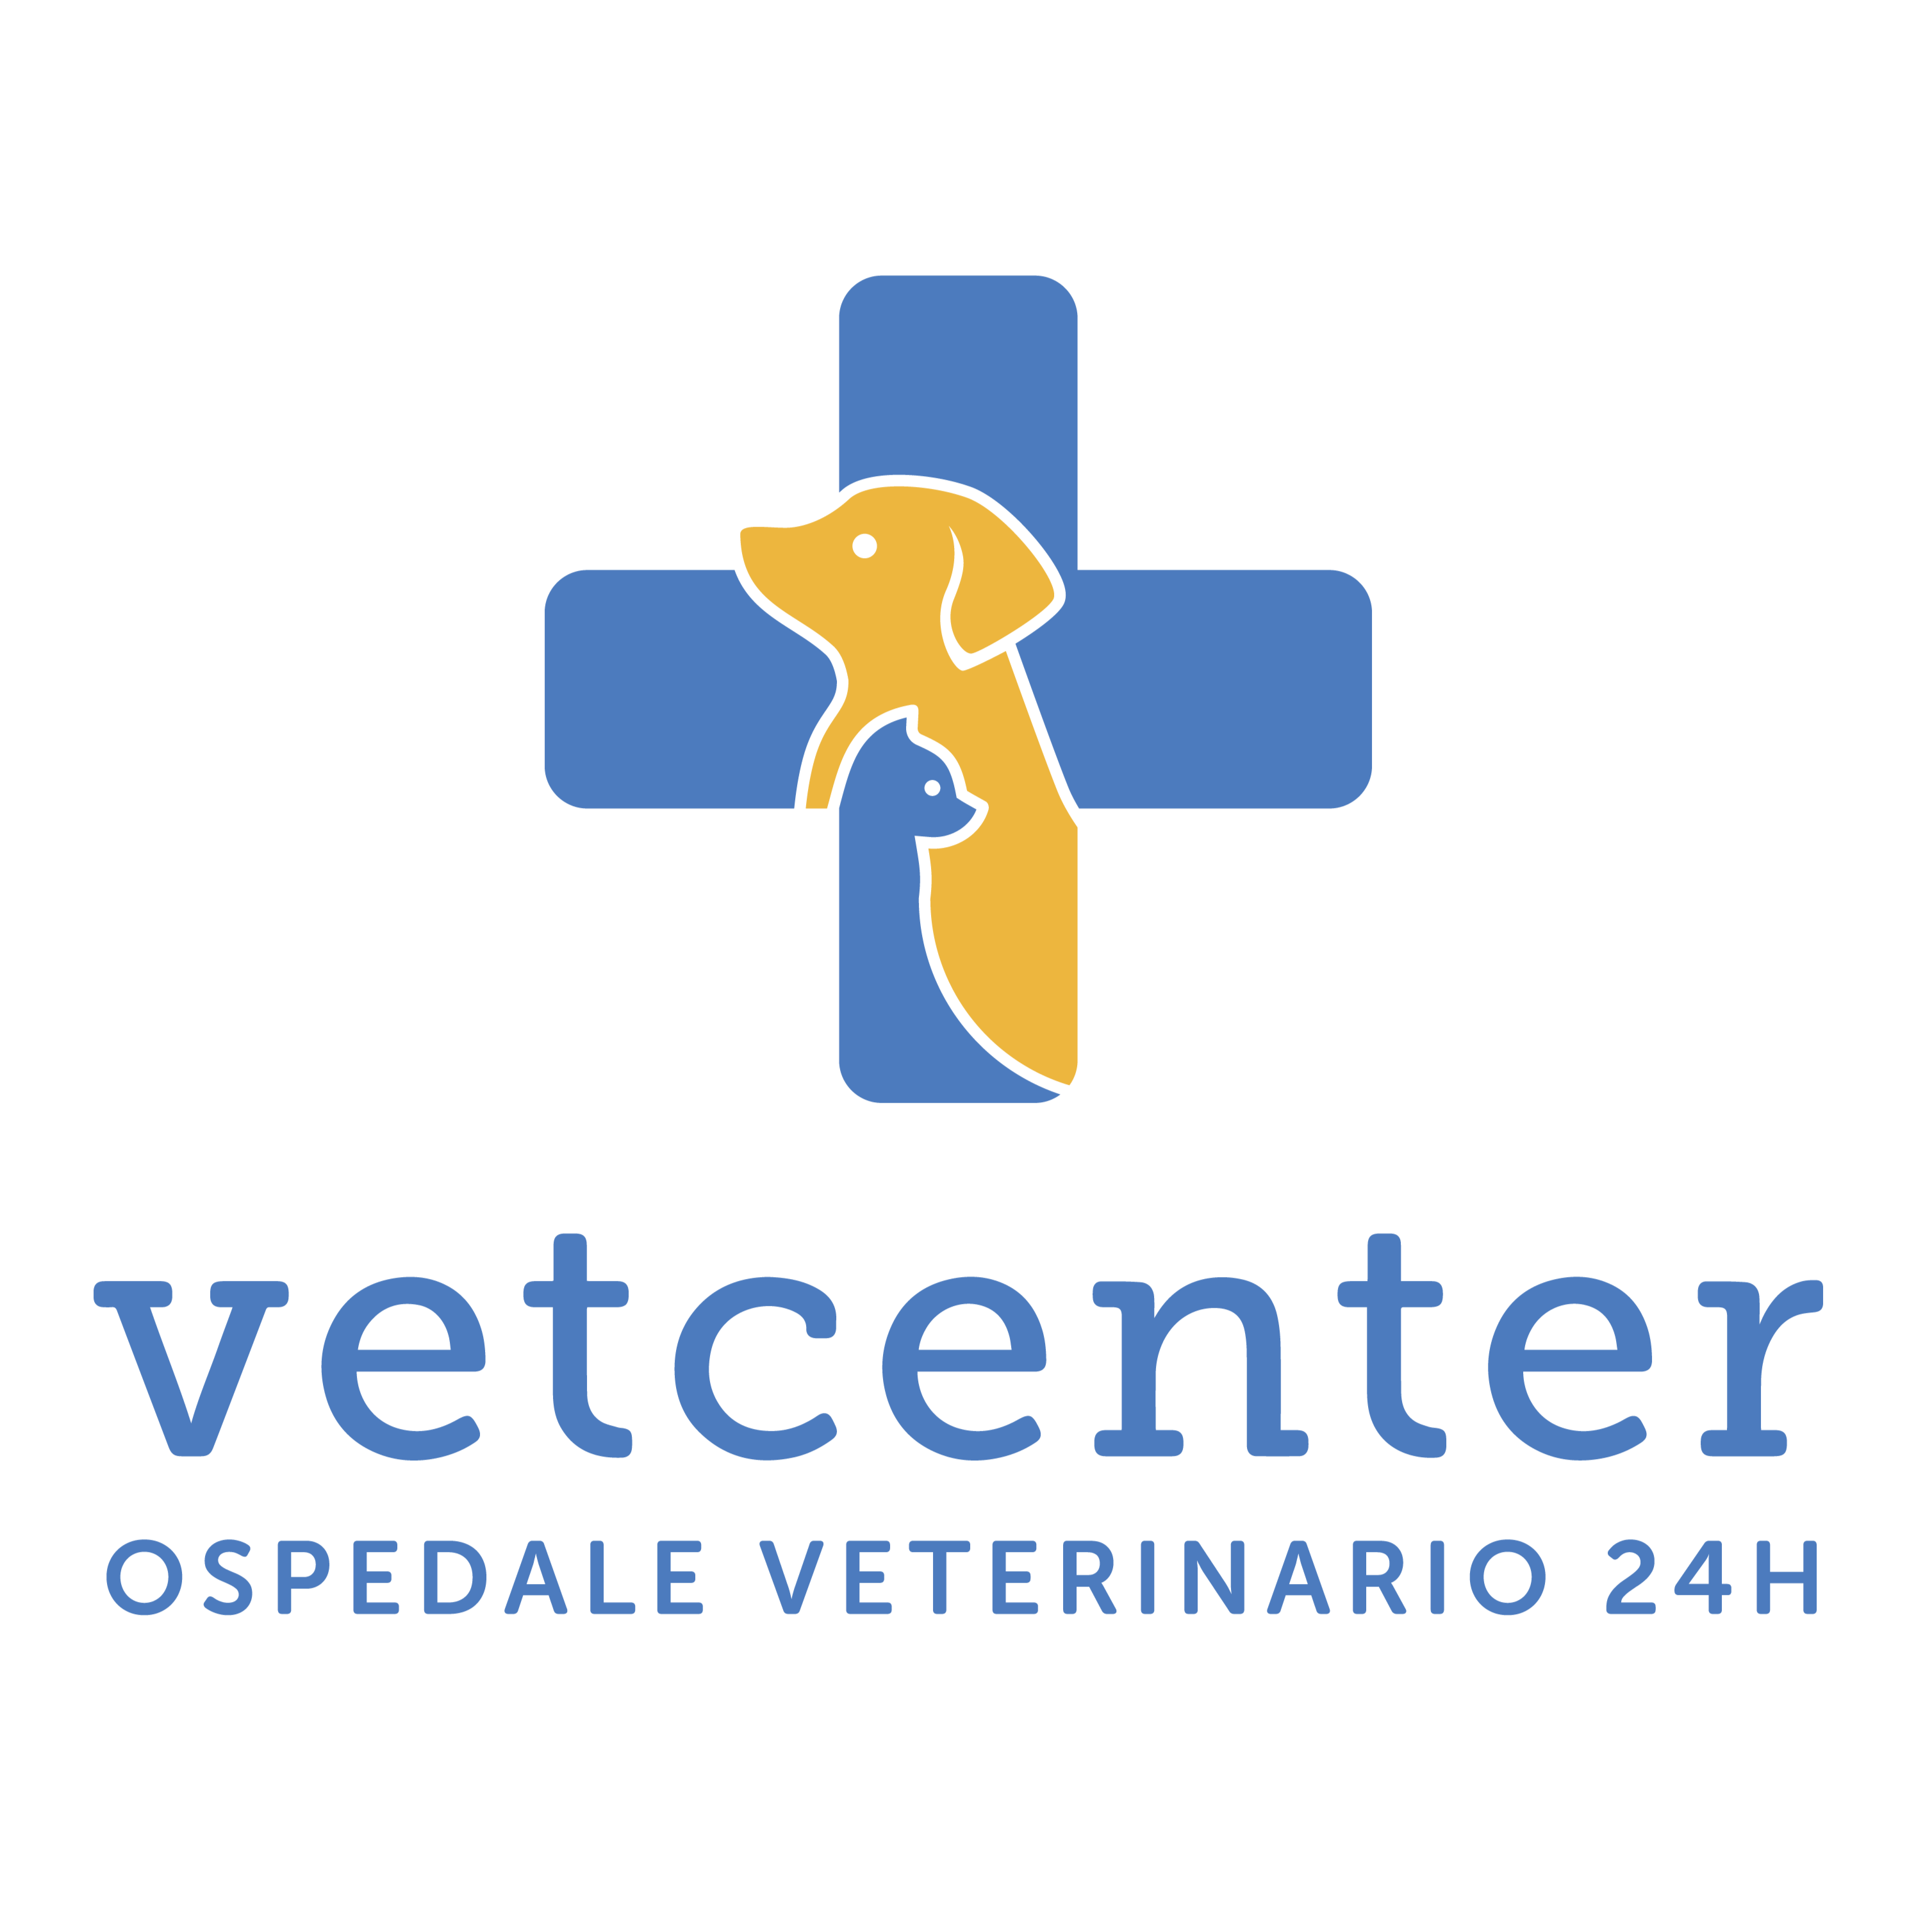 VETCENTER OSPEDALE VETERINARIO 24H Logo